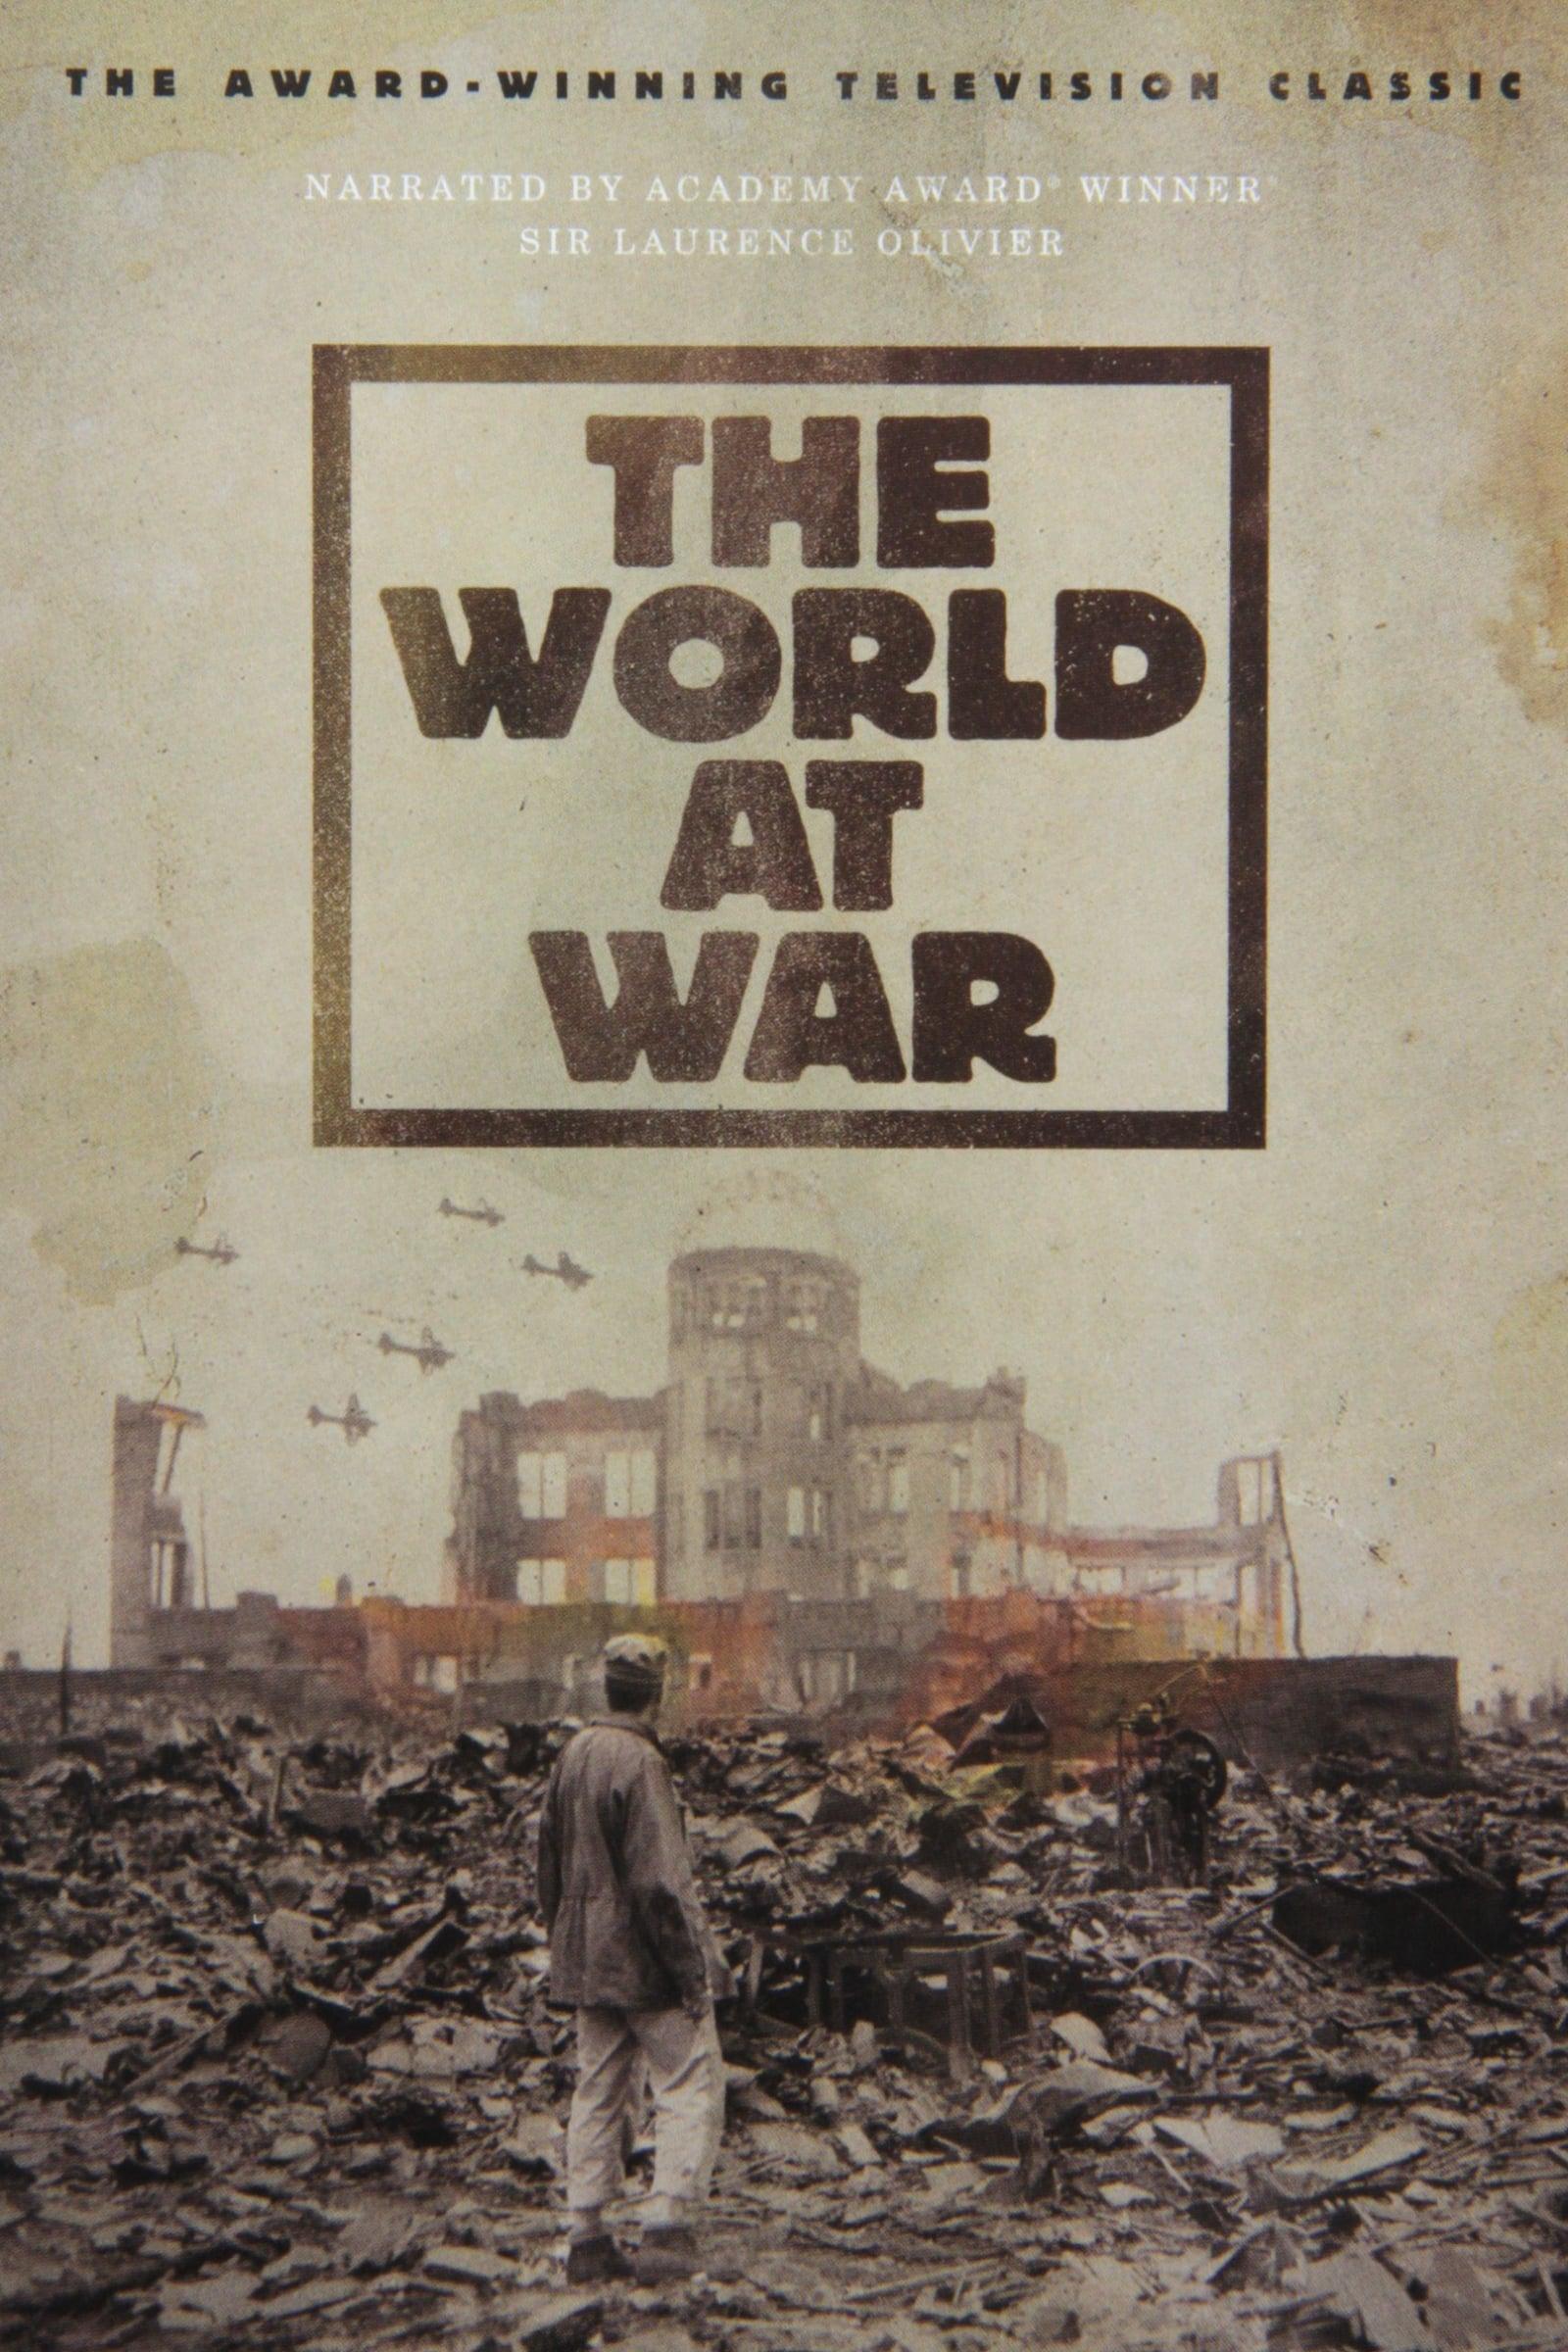 The World at War poster